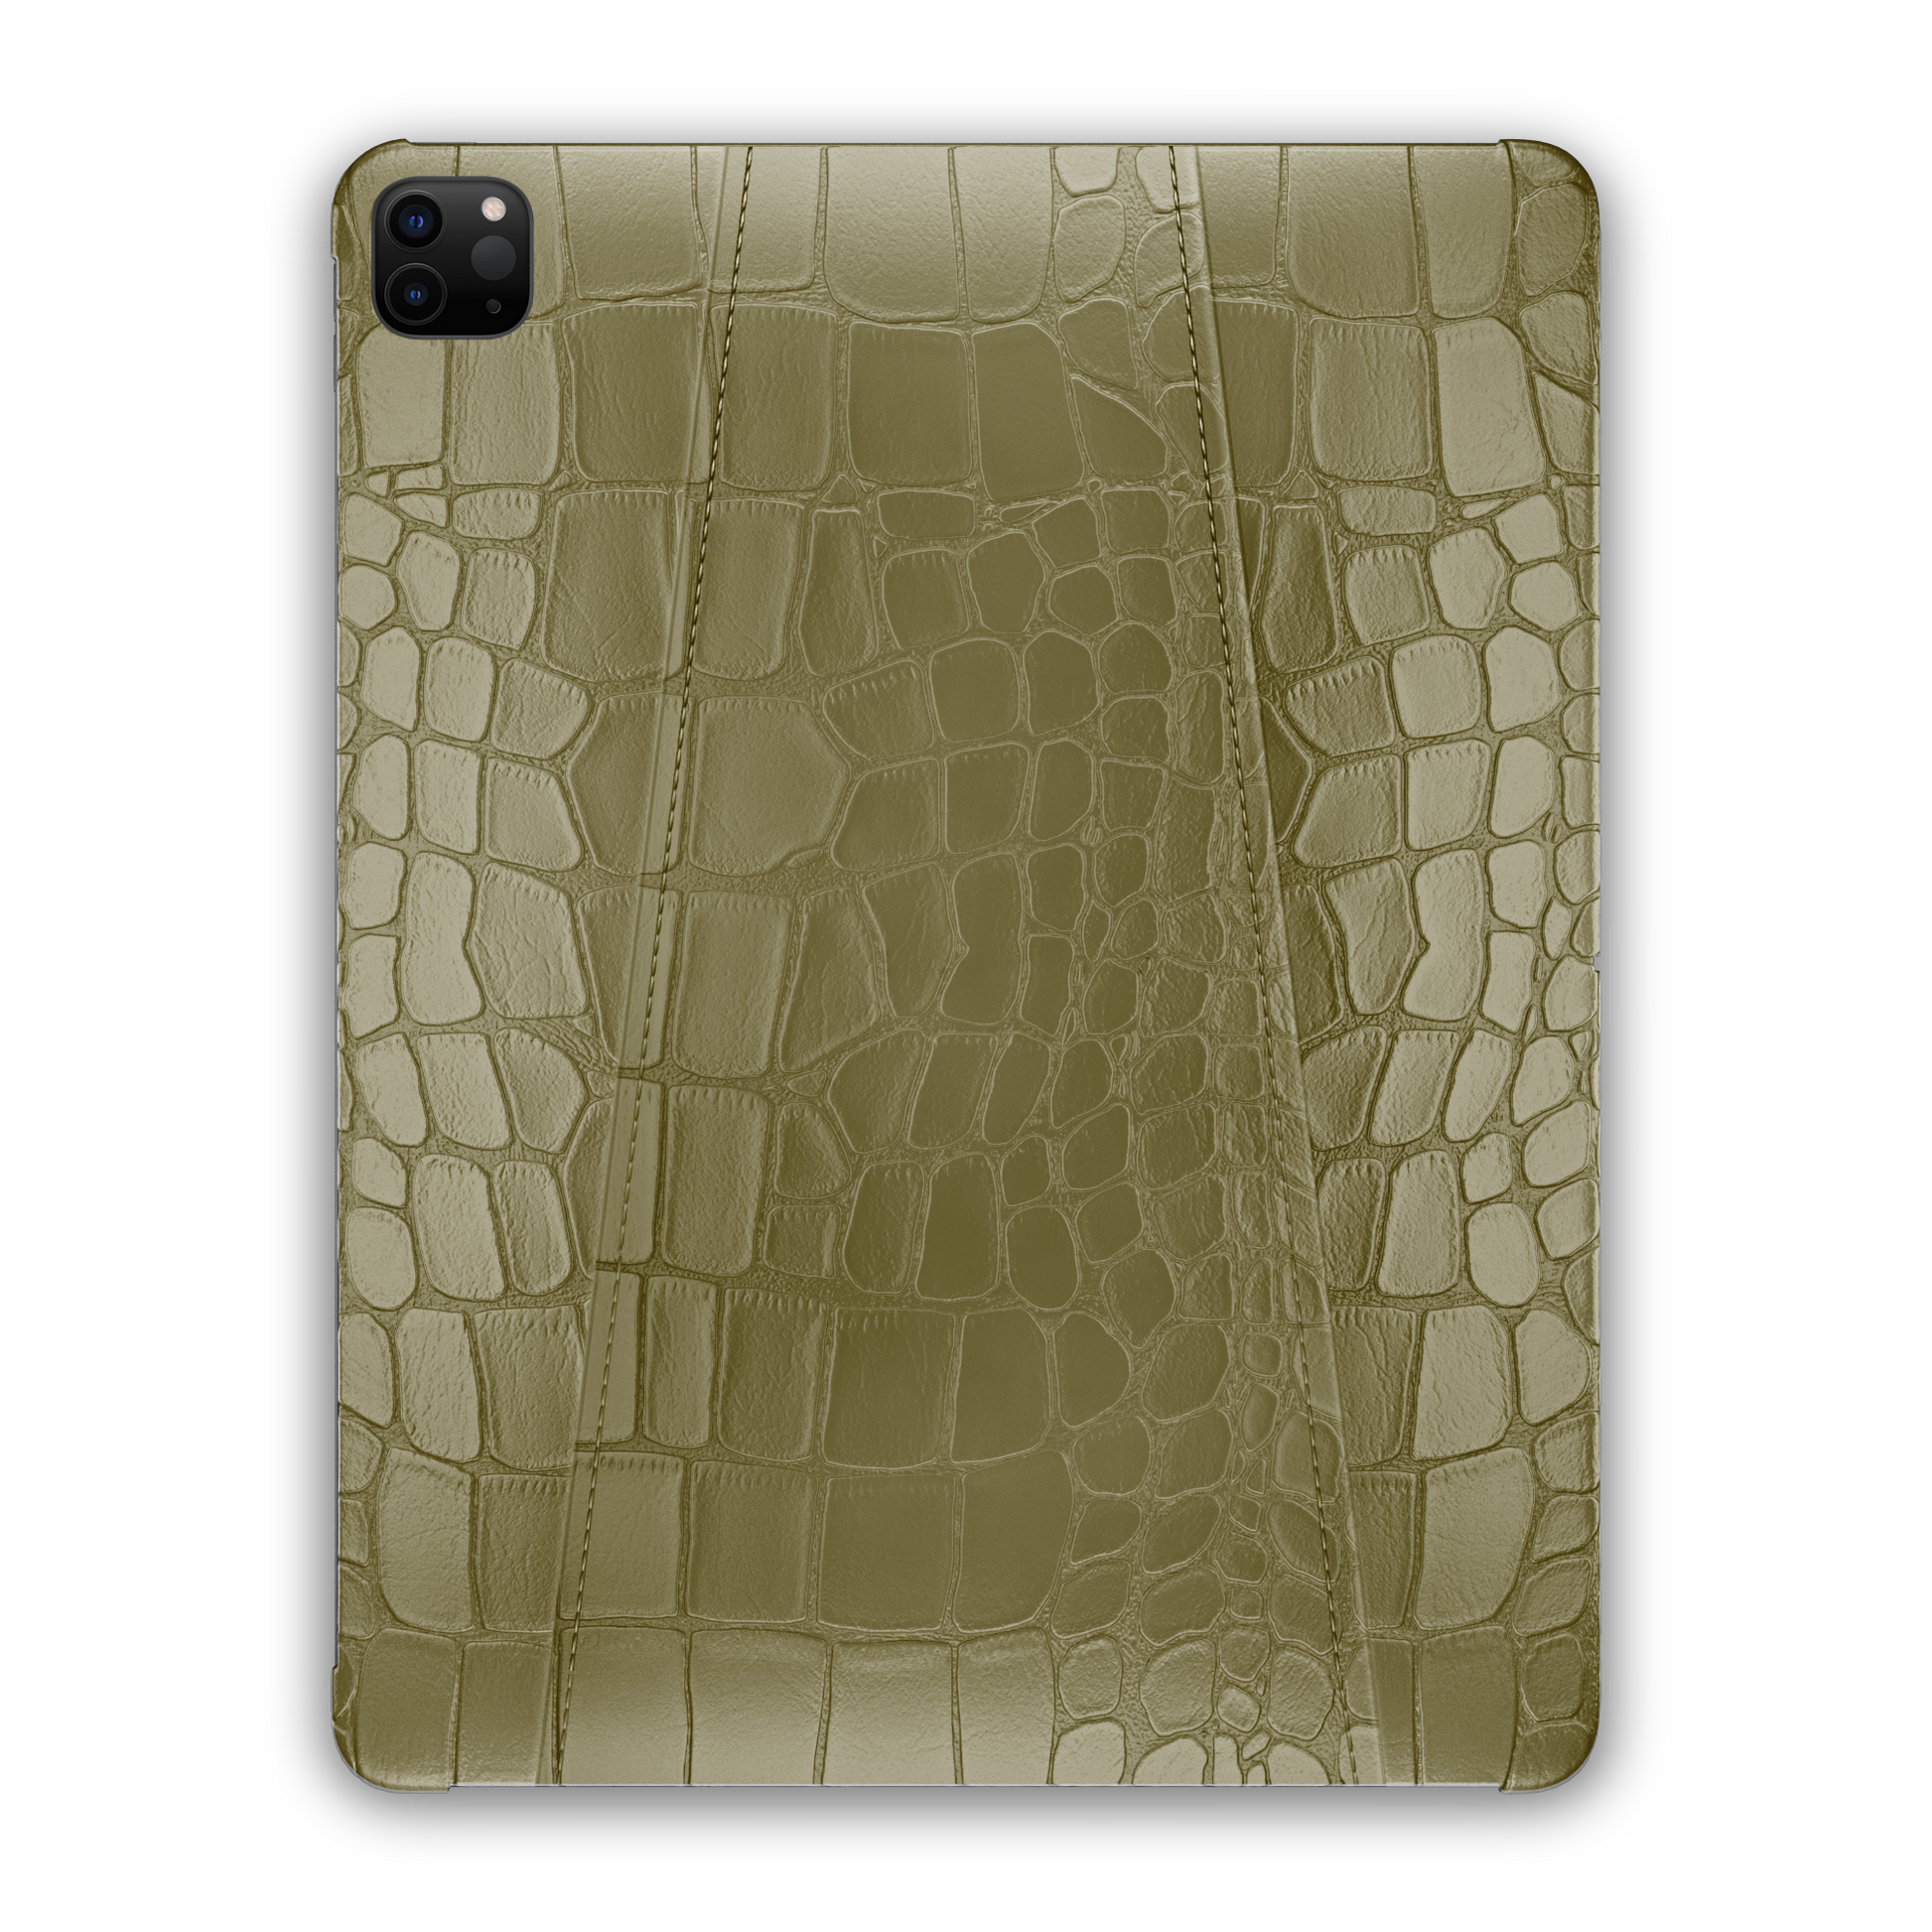 Ipad Pro (2nd-3rd-4th Gen) 11-inch Olive Green Alligator Case